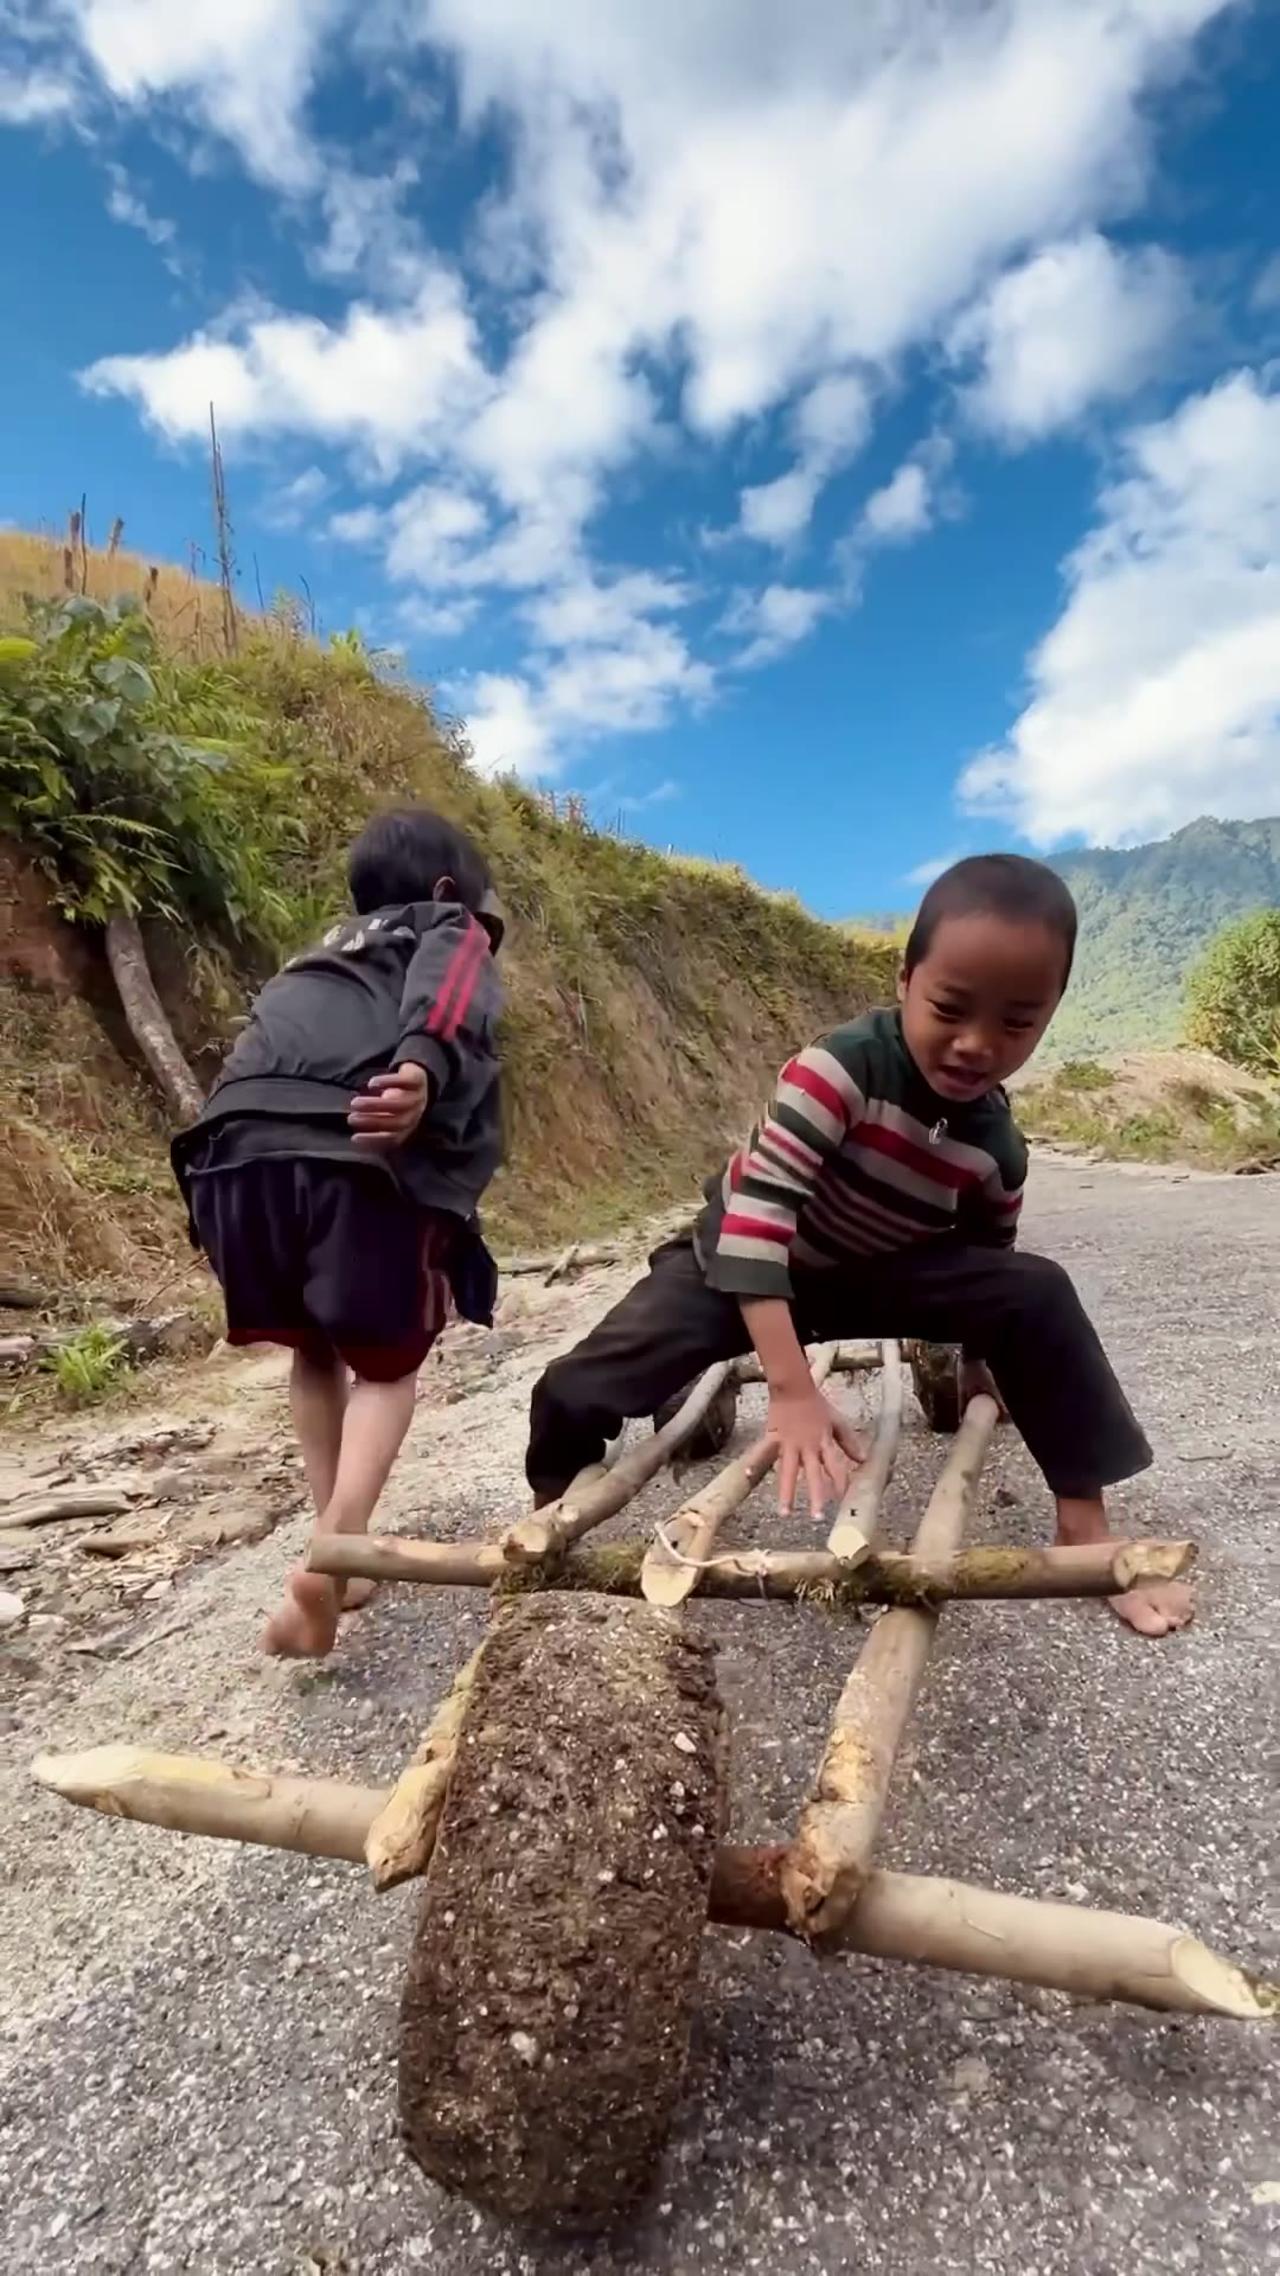 Children Play On Homemade Wood Vehicle